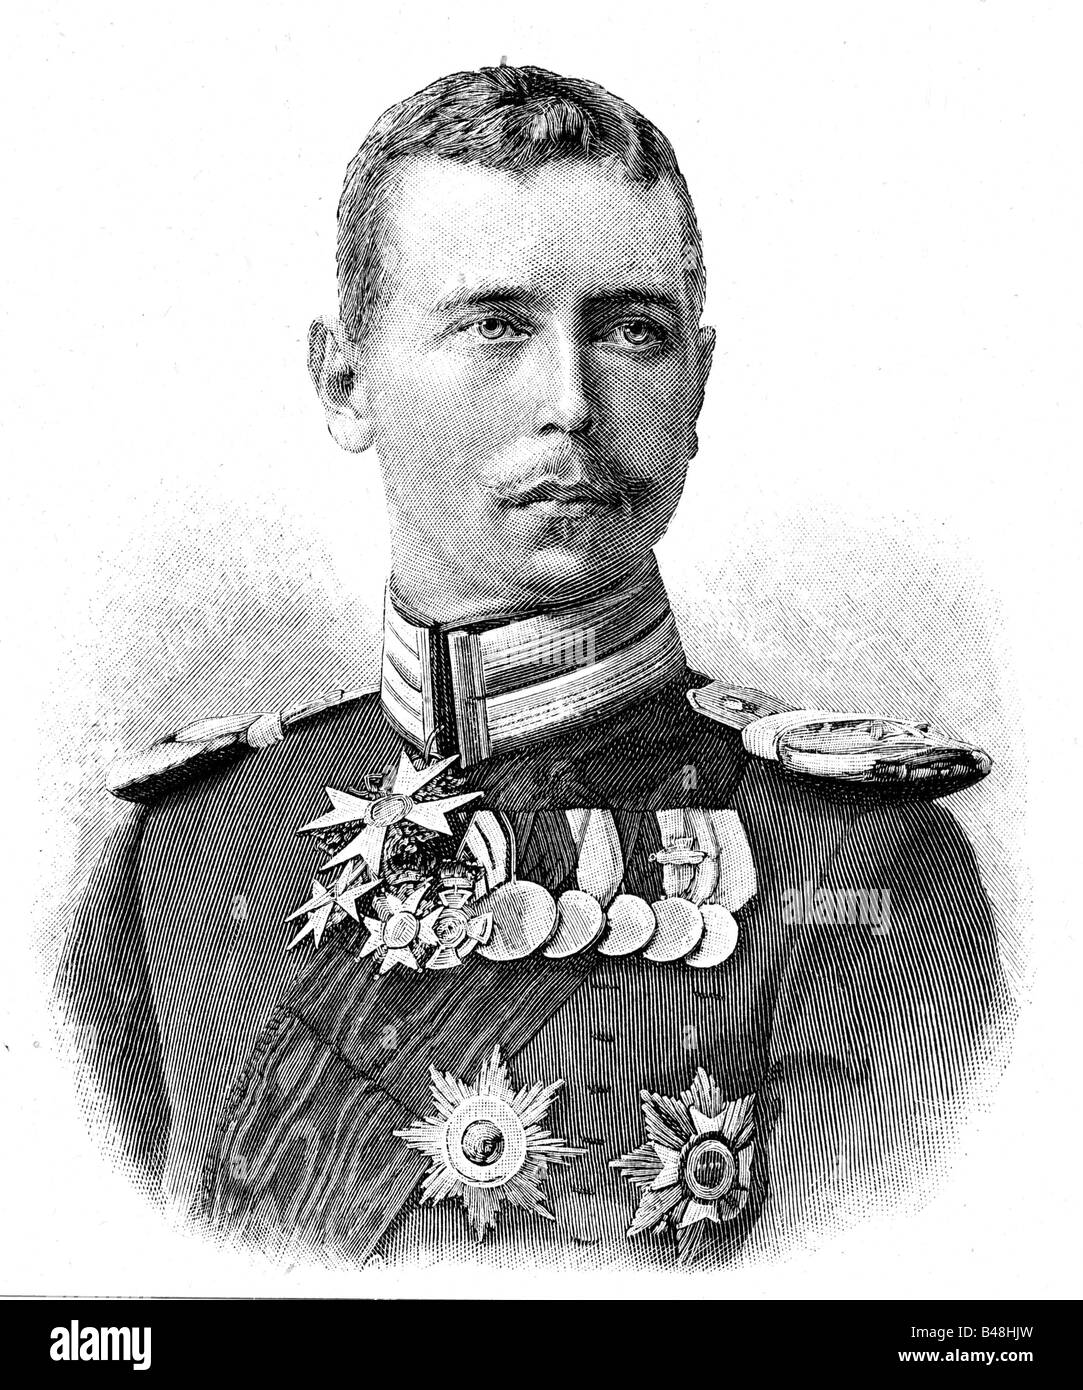 Alfred Alexander, 15.10.1874 - 6.2.1899, Heditary Prince of Stockfoto